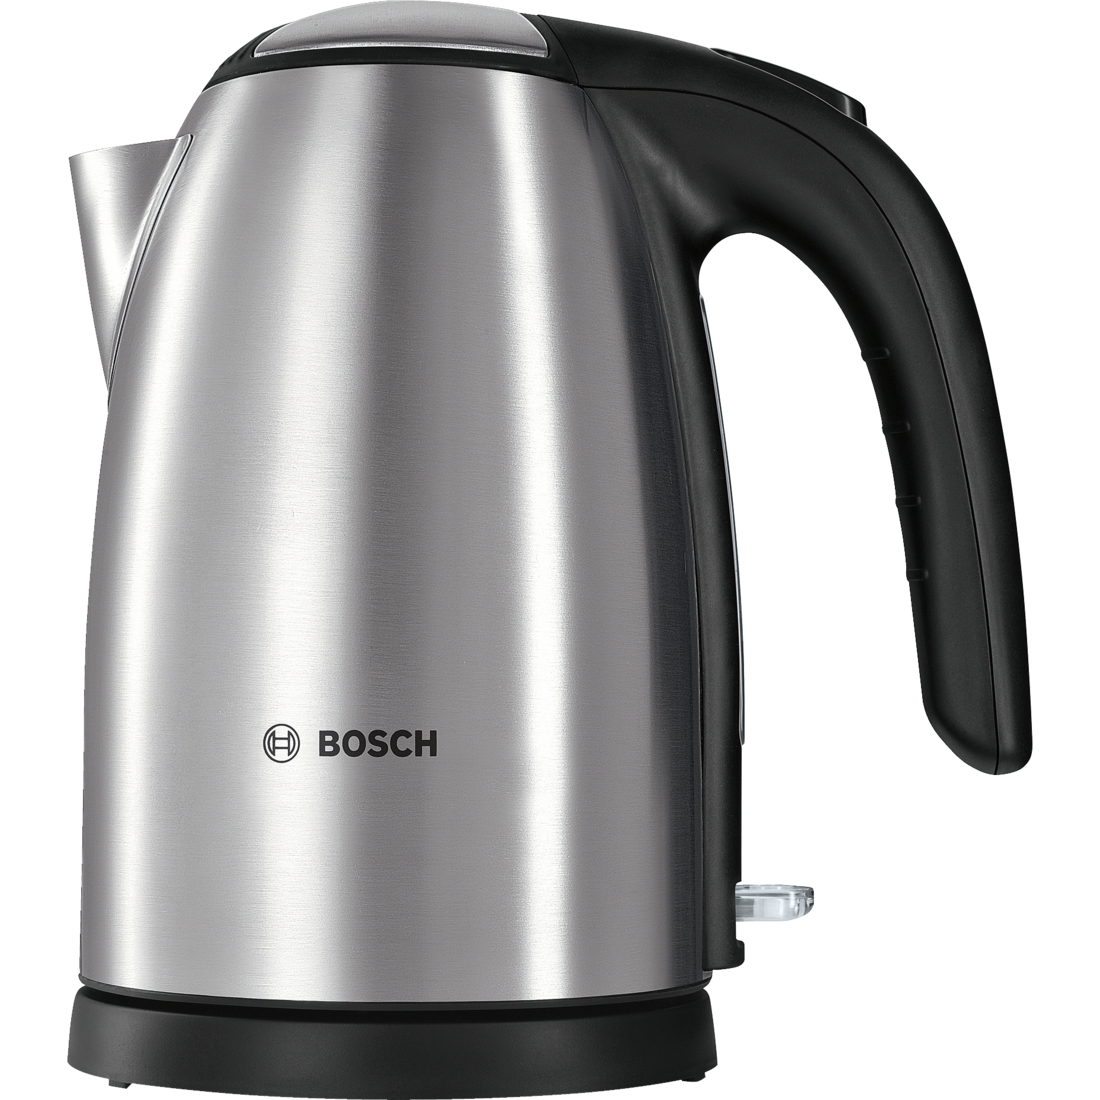 Fierbator de apa Bosch TWK7801, 2200 W, 1.7 l, cană din inox, filtru anti-calcar detasabil din inox, Inox/negru